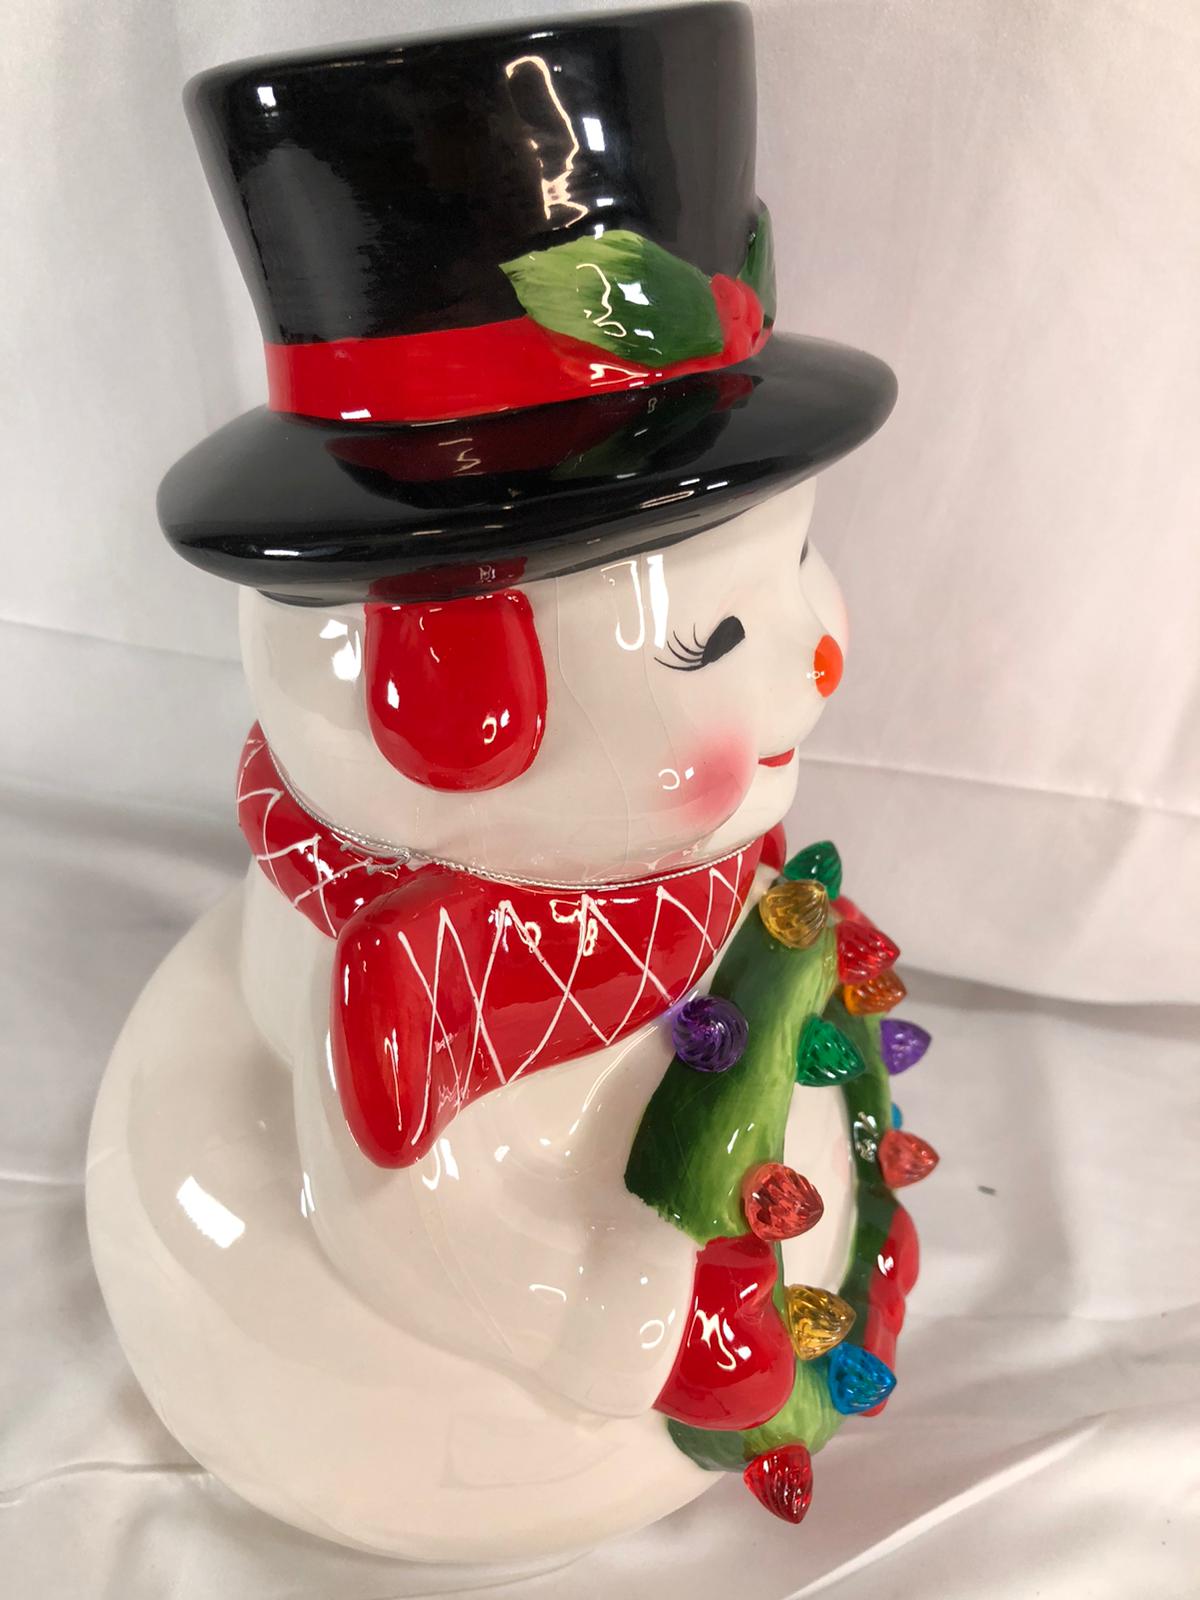 Mr. Christmas Nostalgic Ceramic Tabletop Figure